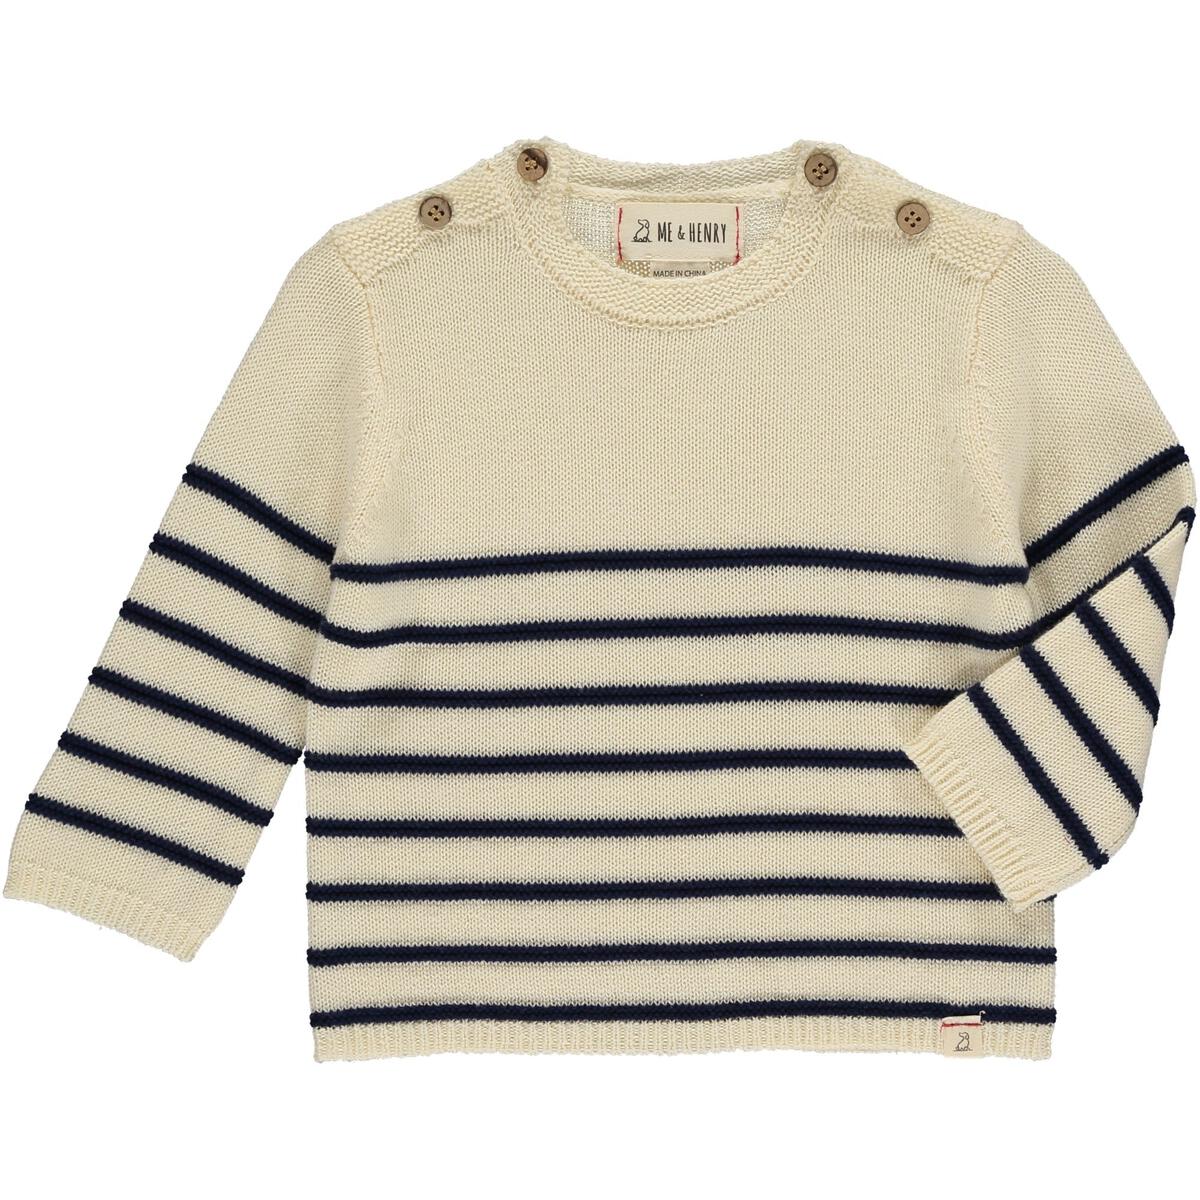 BRETON Baby Sweater, Cream/Navy Stripe